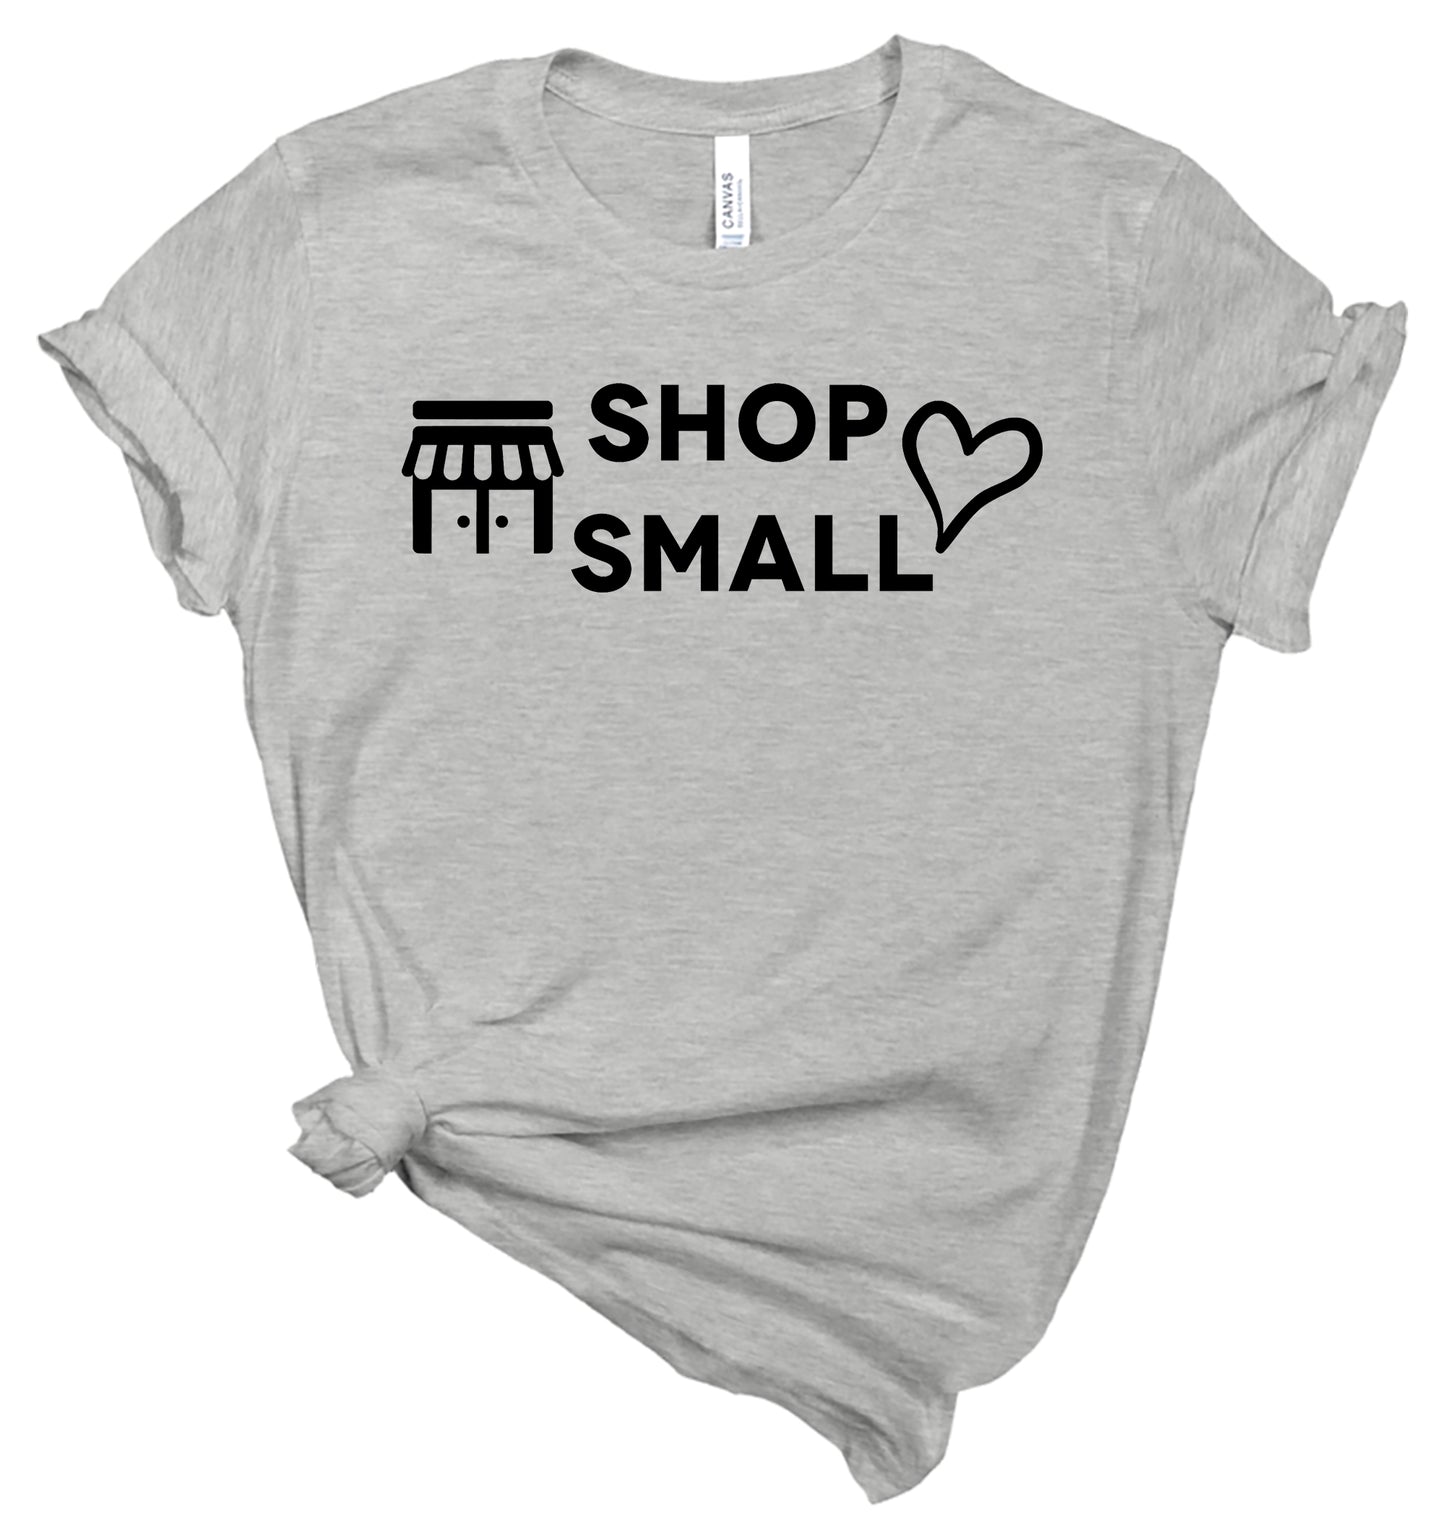 Shop Small T-Shirt - Support Small Business Shirt